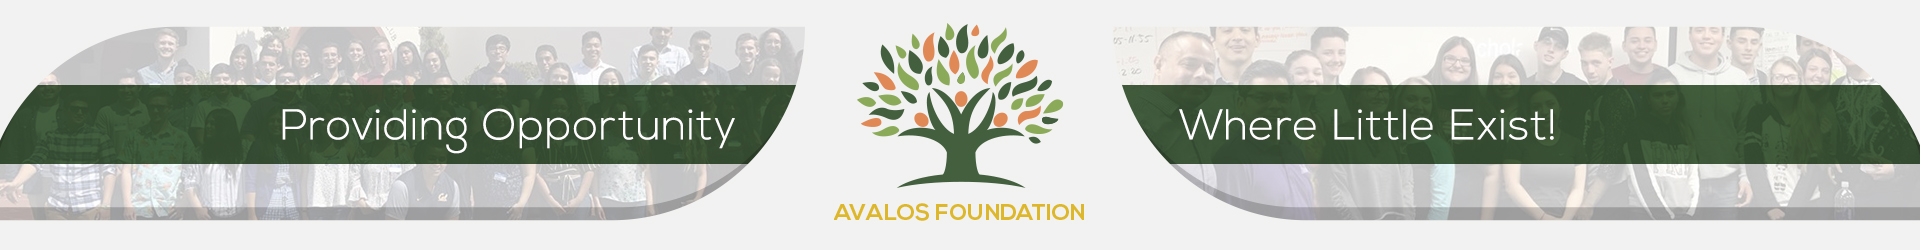 Avalos Foundation - top header